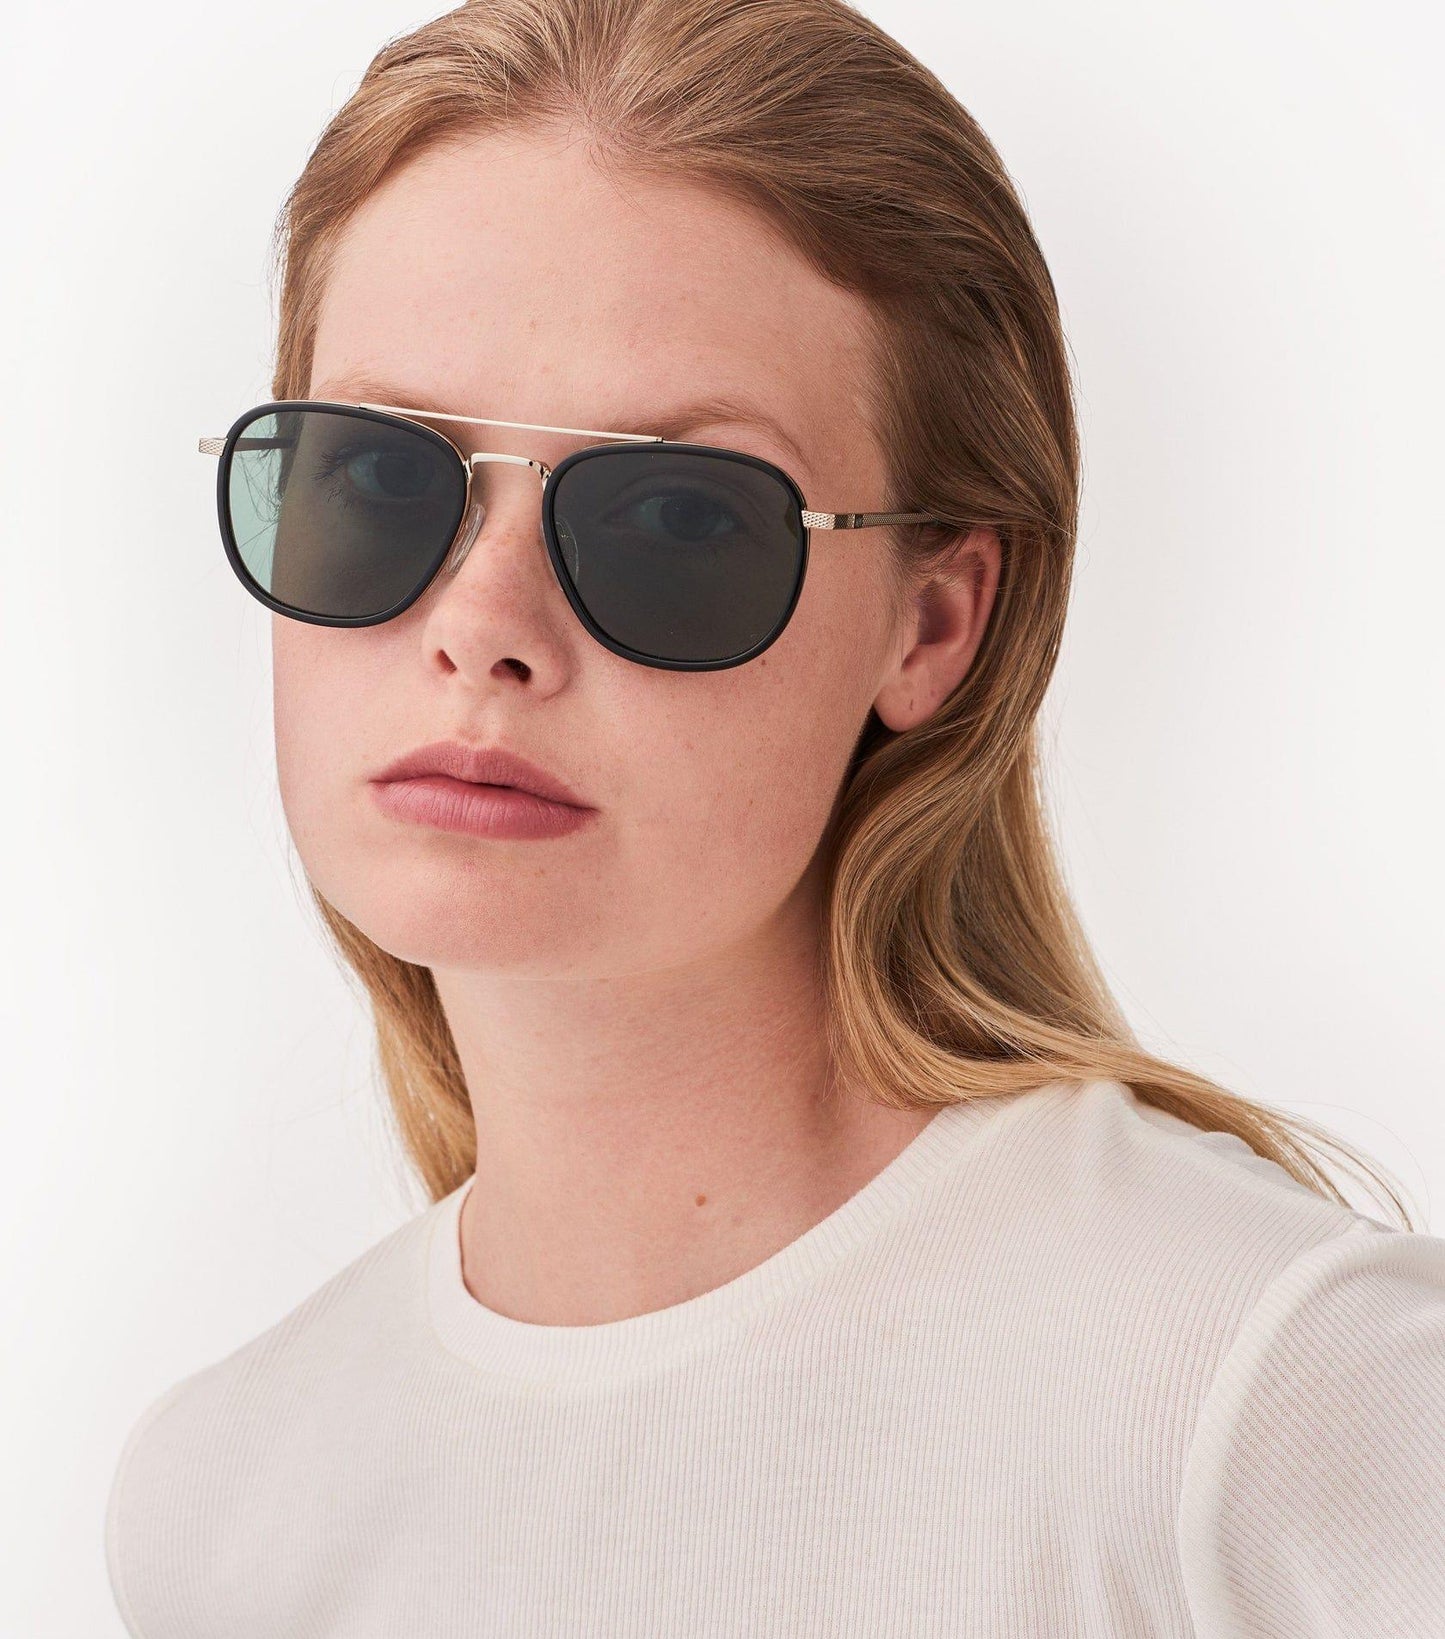 QUENTIN, Rectangular sunglasses for men and women green lens UV400 protection